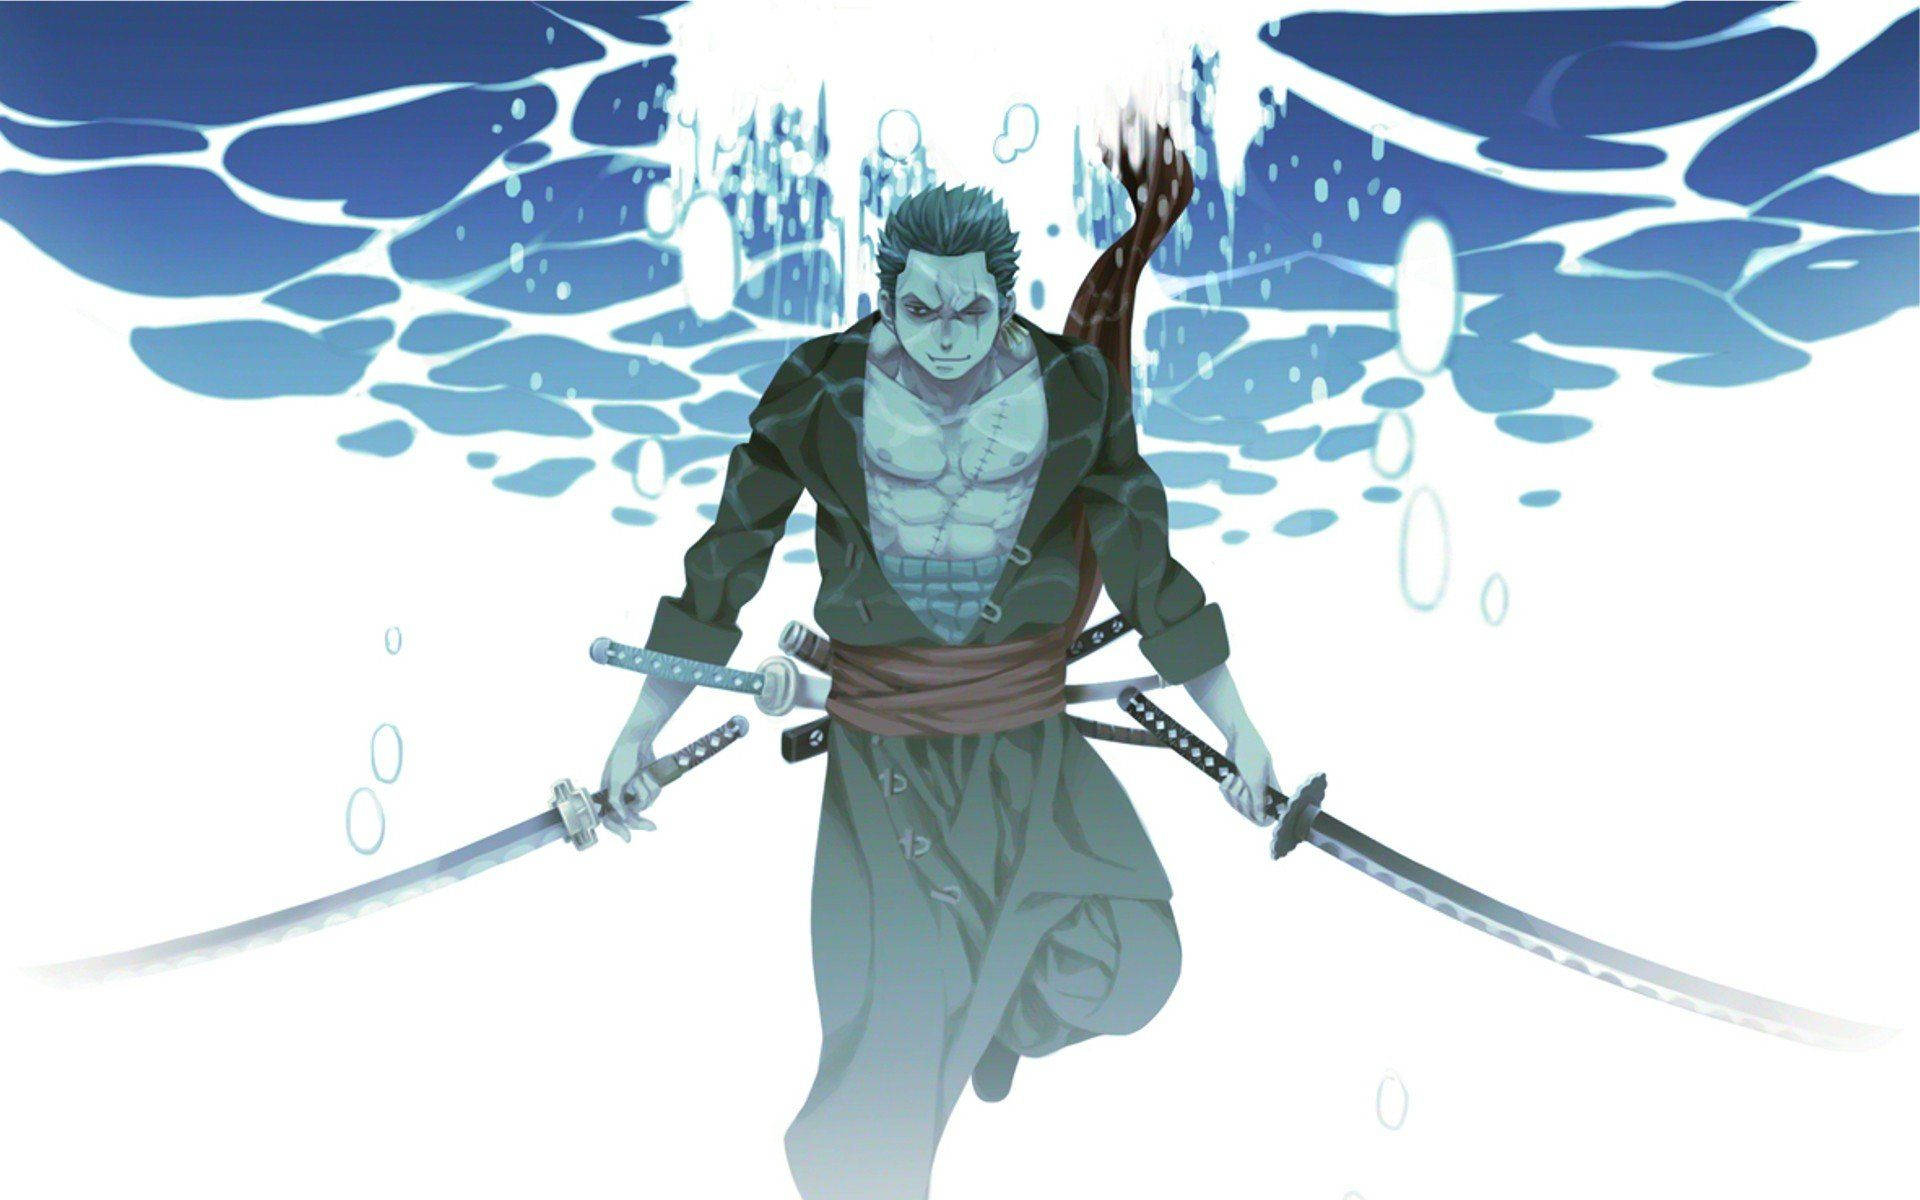 Image  Roronoa Zoro Battling His Enemy in the Ocean Wallpaper